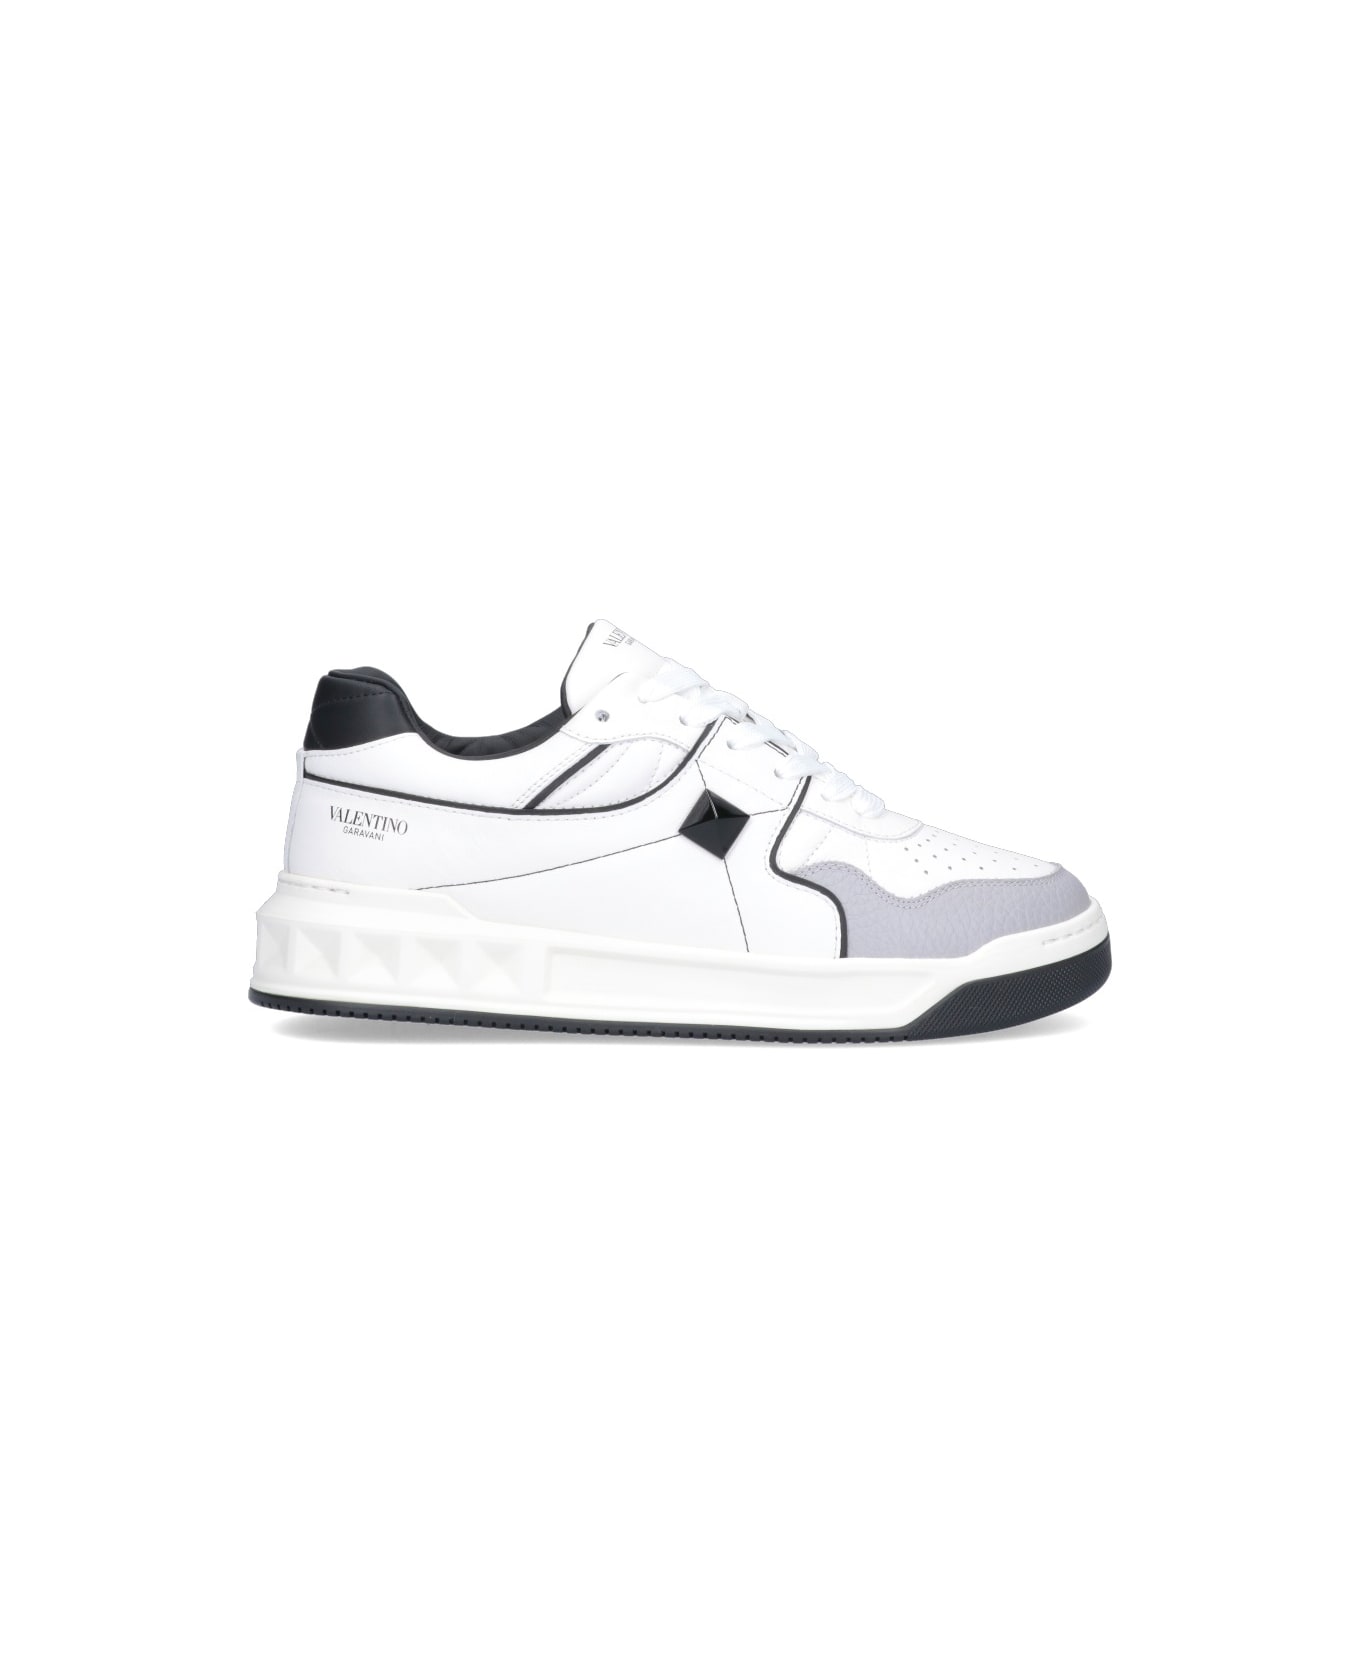 Valentino Garavani Low-top One Stud Sneakers - White